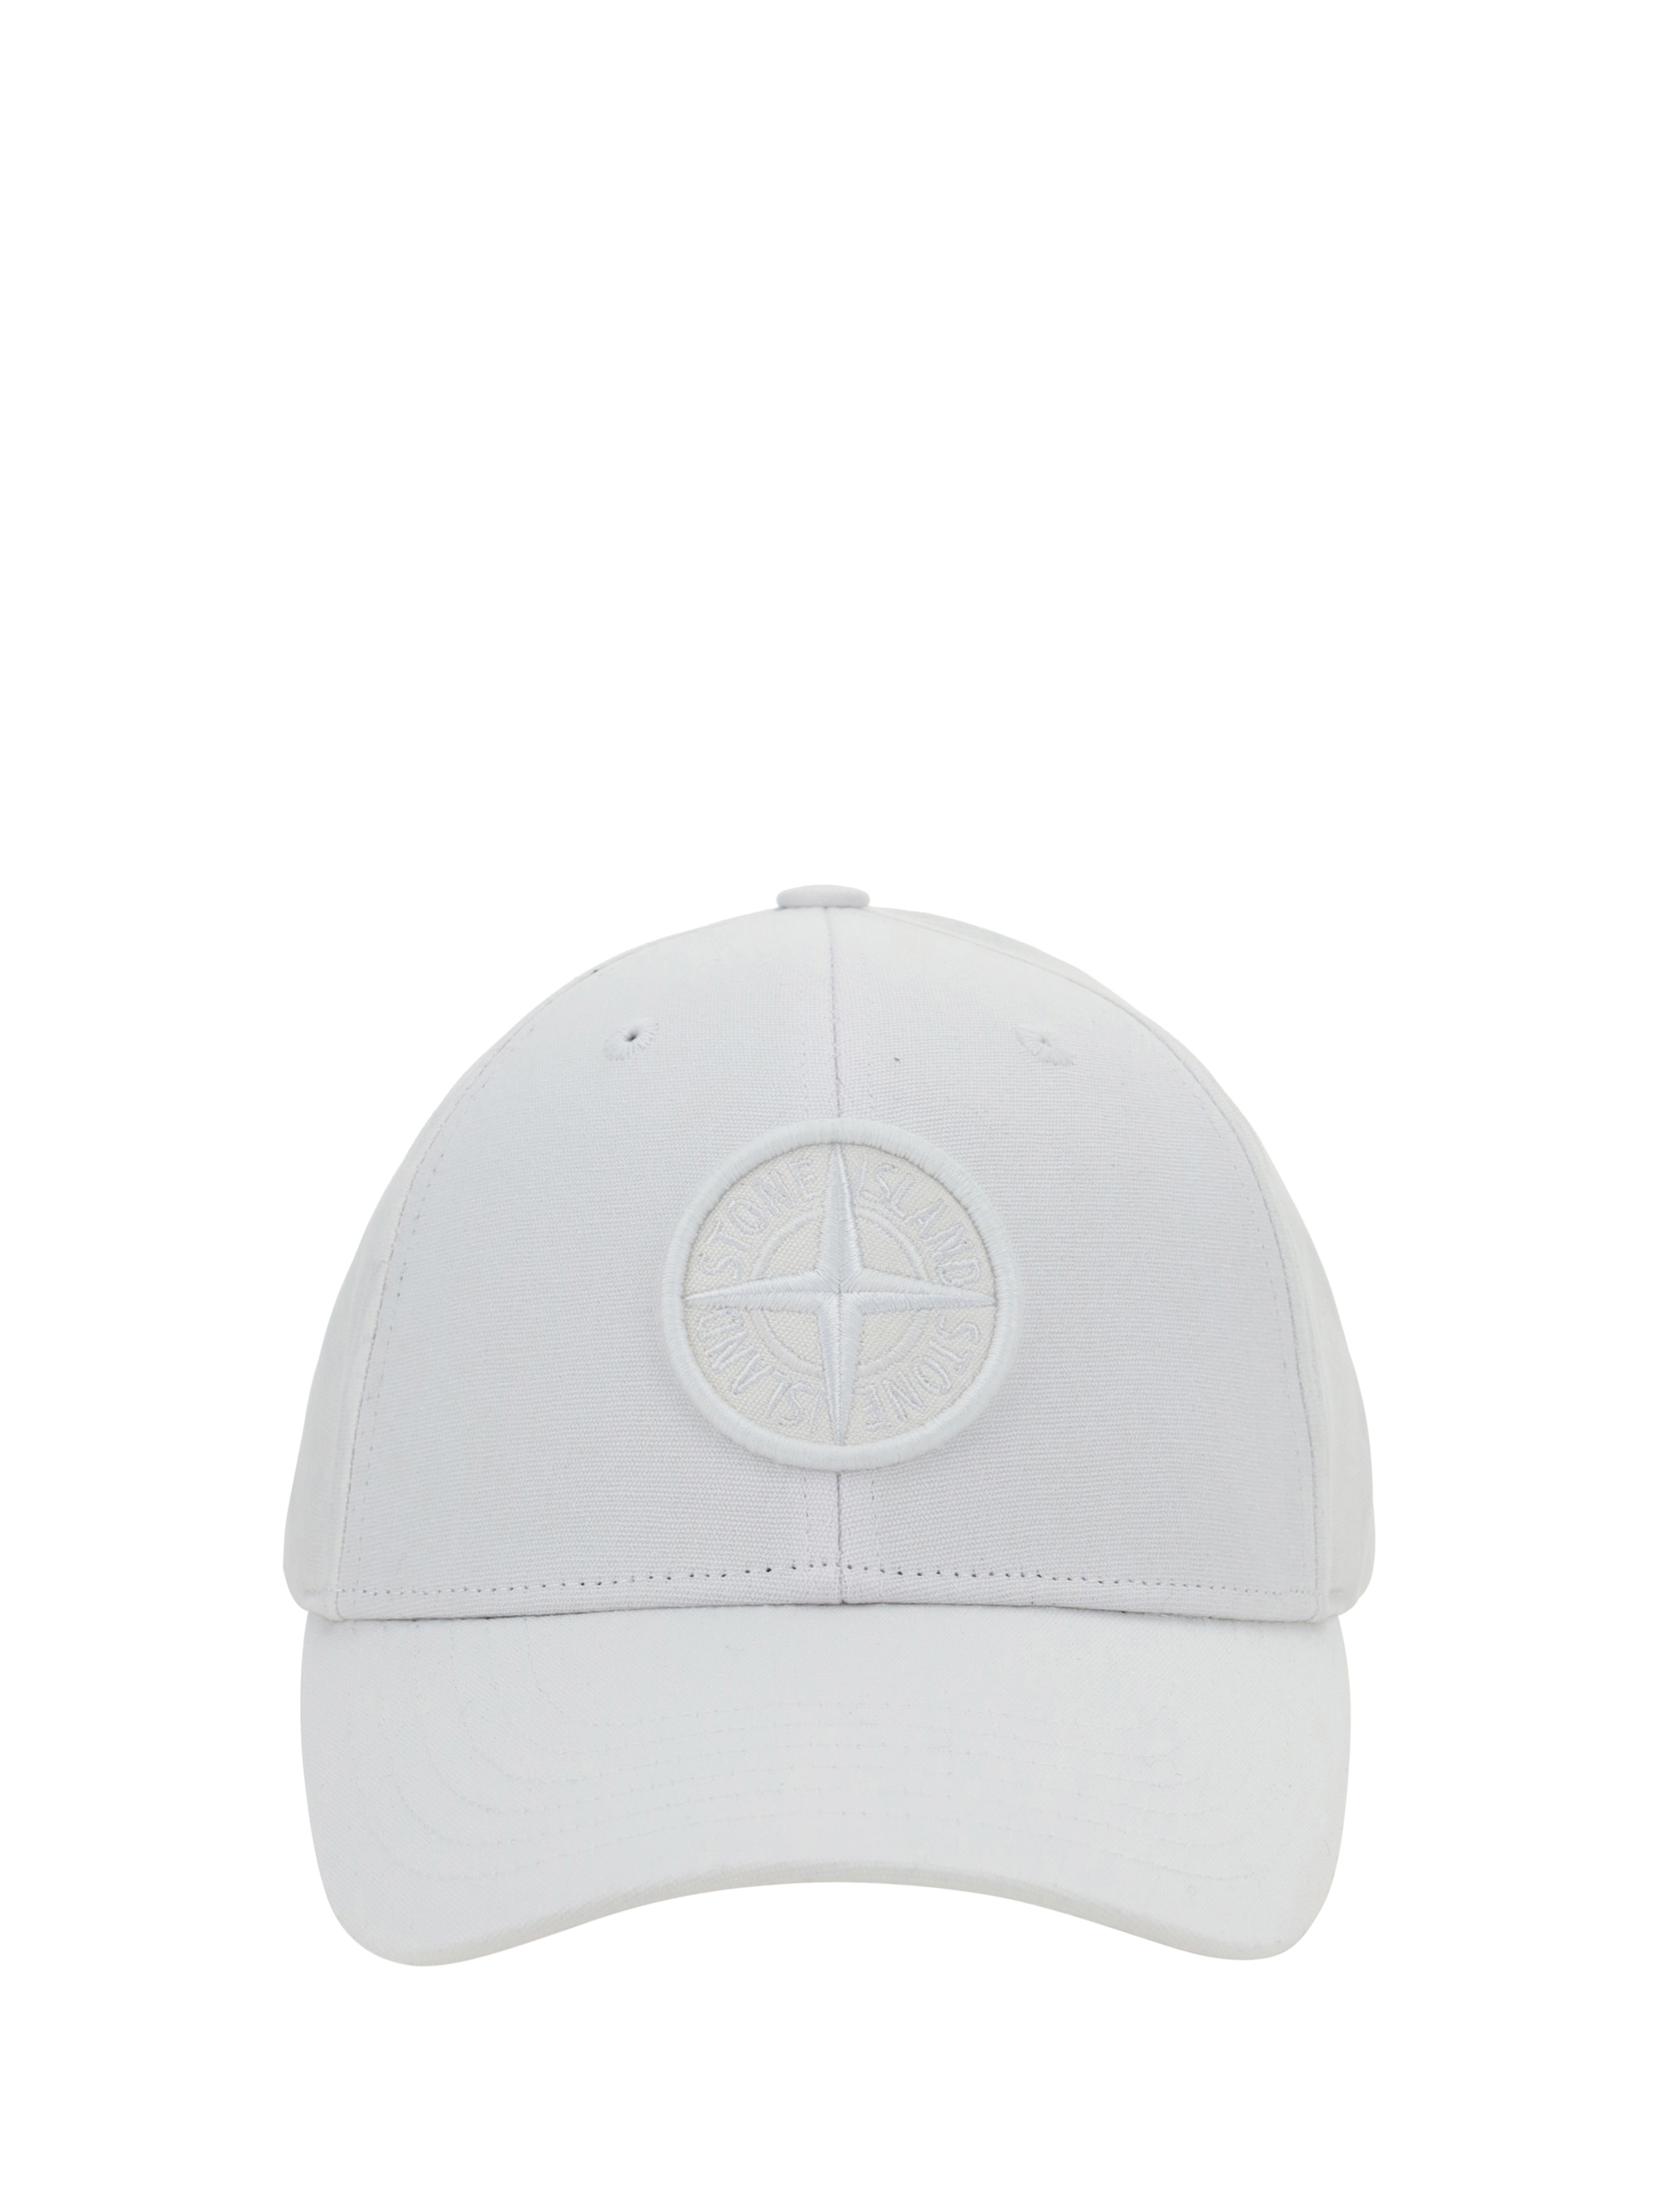 stone island - baseball cap